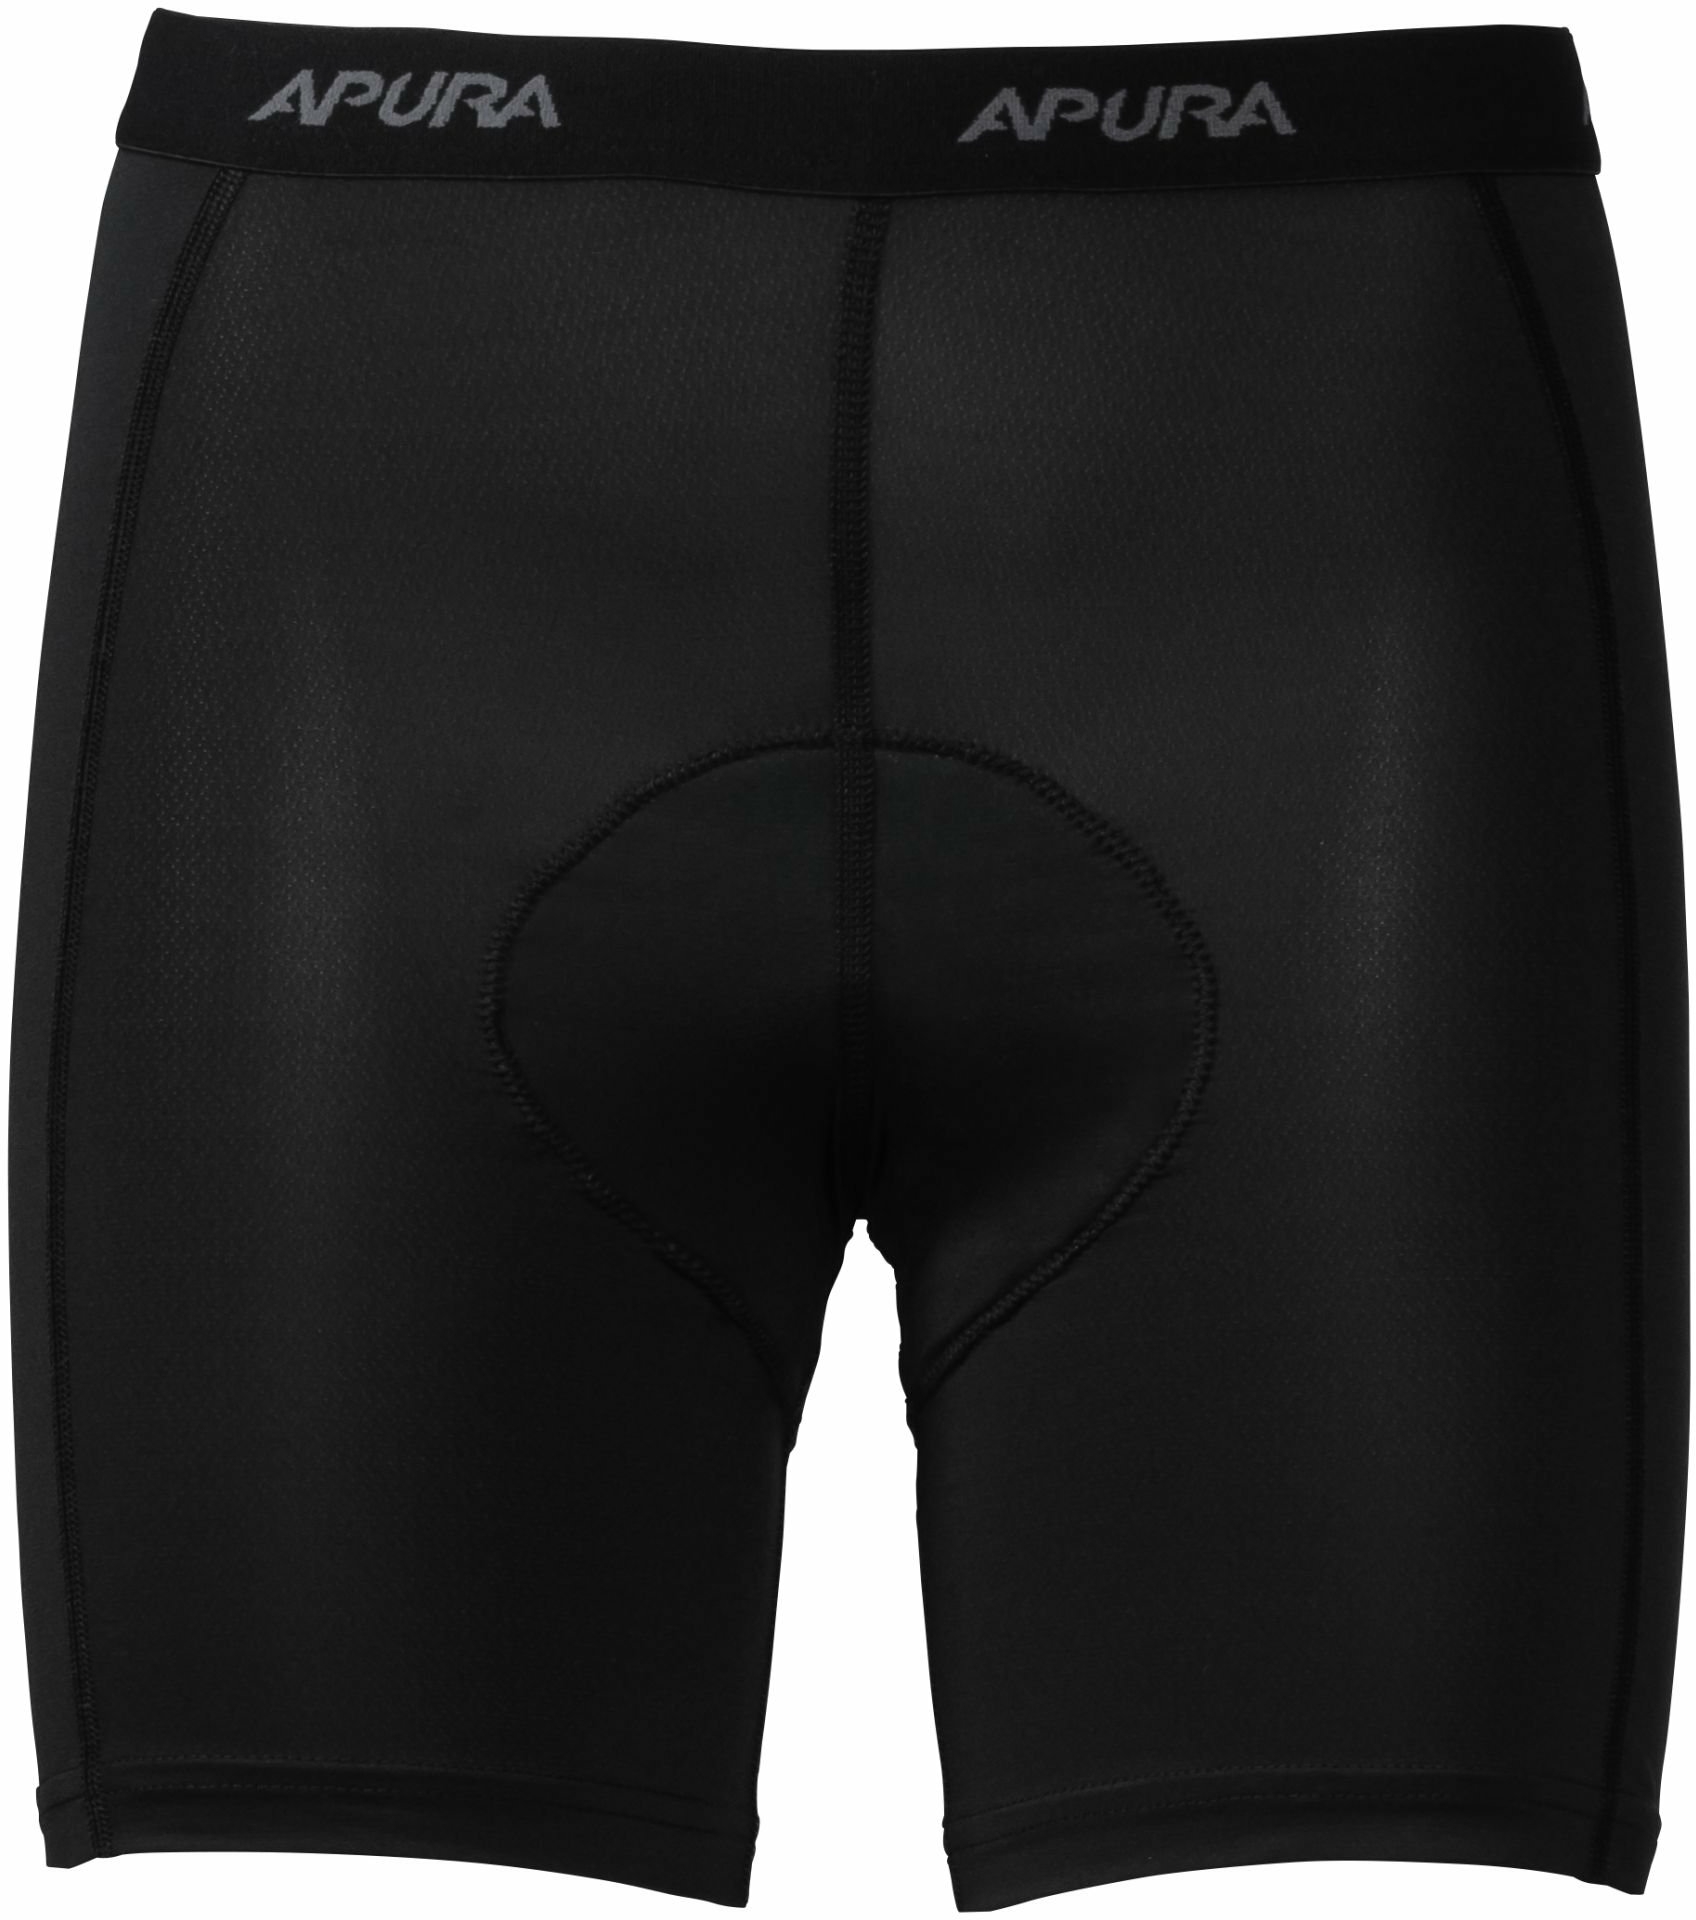 Bekleidung/Unterwäsche: Apura  Damen Unterhose Baselayer Short Pro Comfort XL 